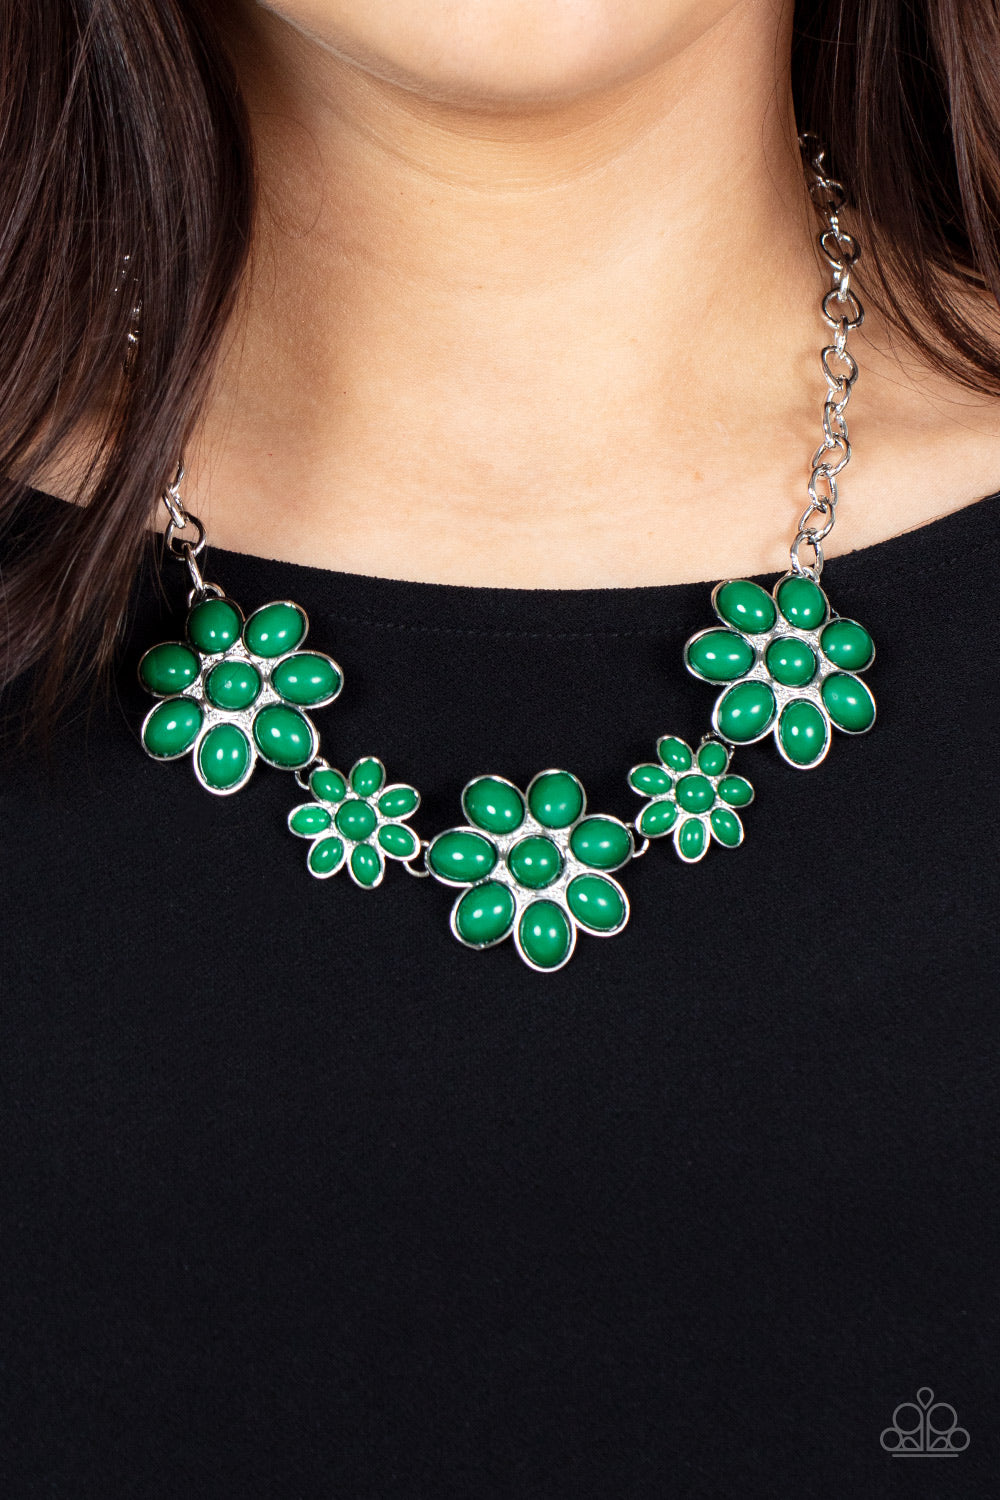 Paparazzi “Flamboyantly Flowering” Green Necklace Earring Set